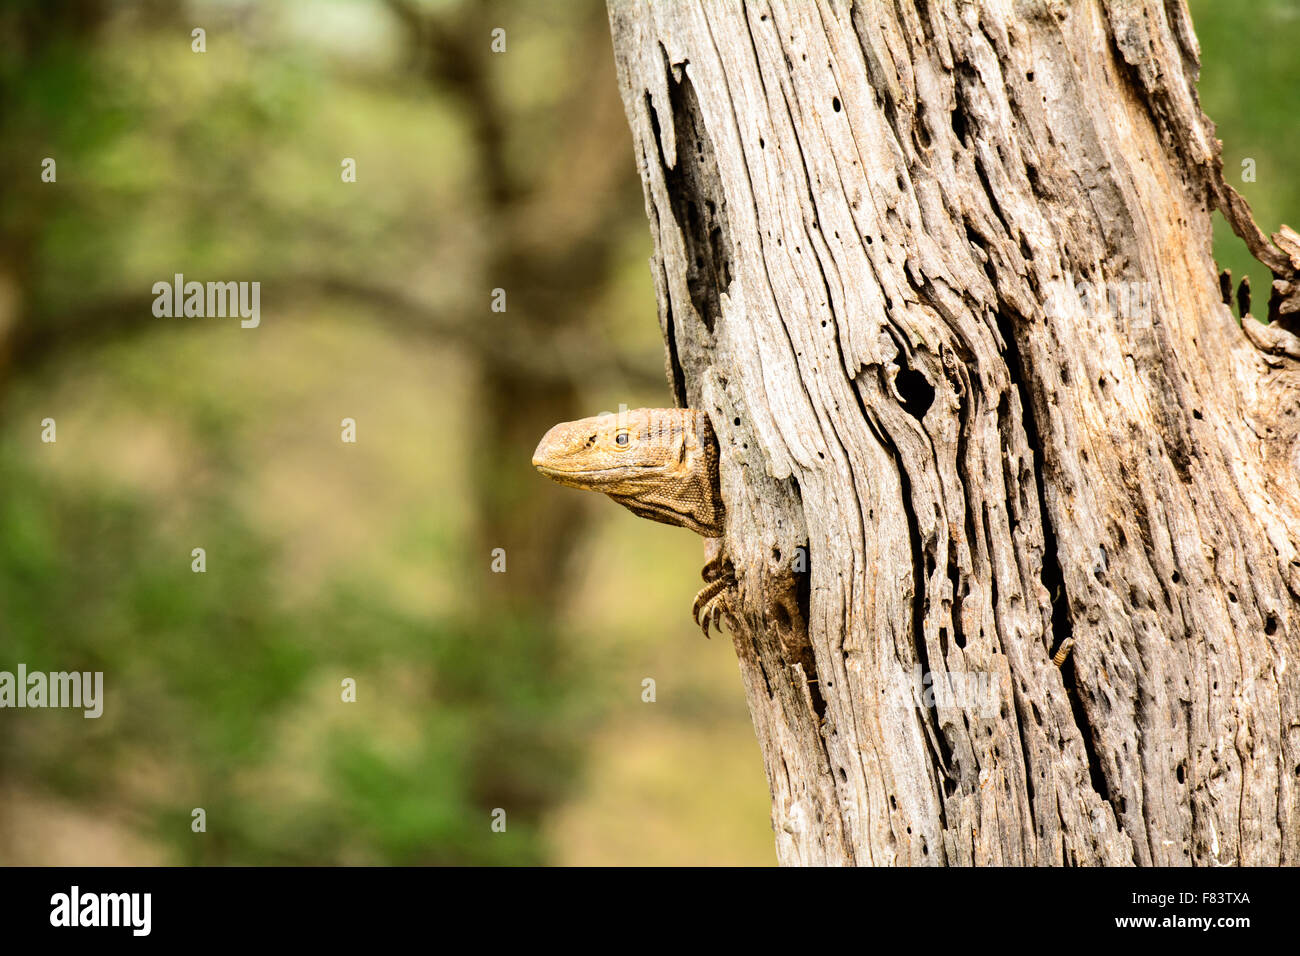 A peeping monitor lizard Stock Photo